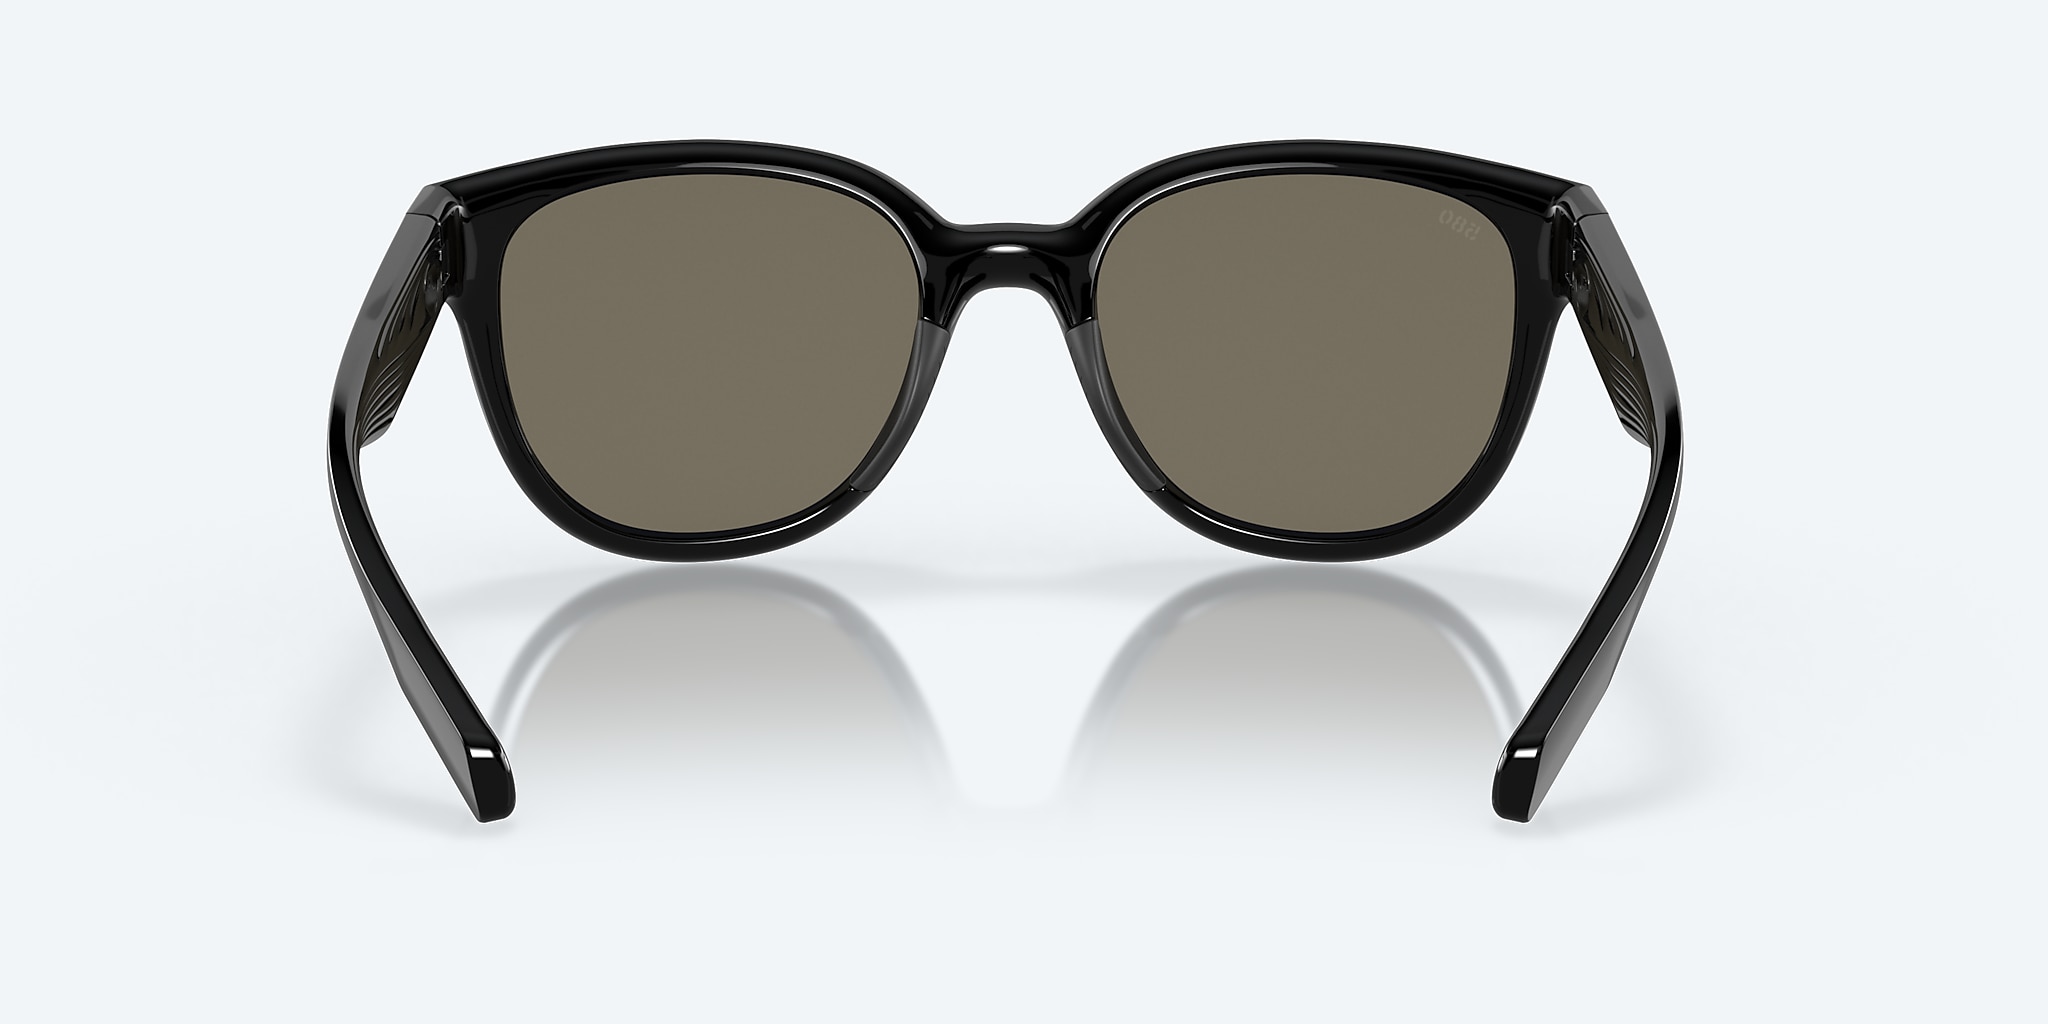 Costa Del Mar Salina Polarized Sunglasses, Blue Glass / Black